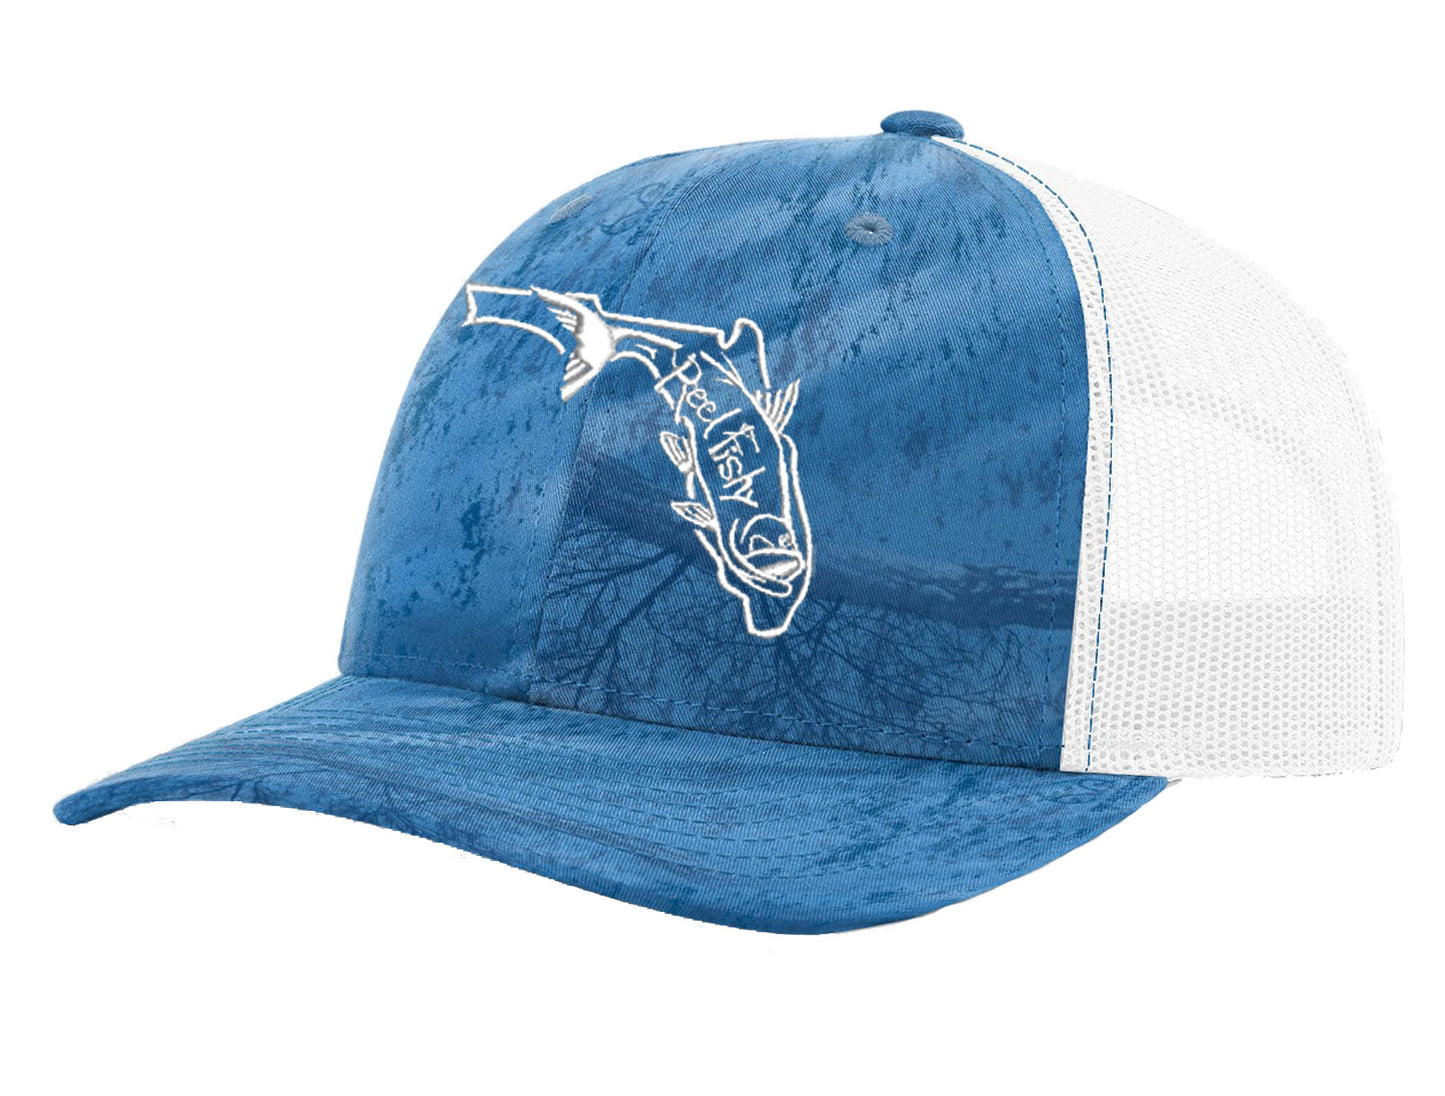 Realtree Blue/White Trucker Hat - State of Florida Reel Fishy Tarpon logo